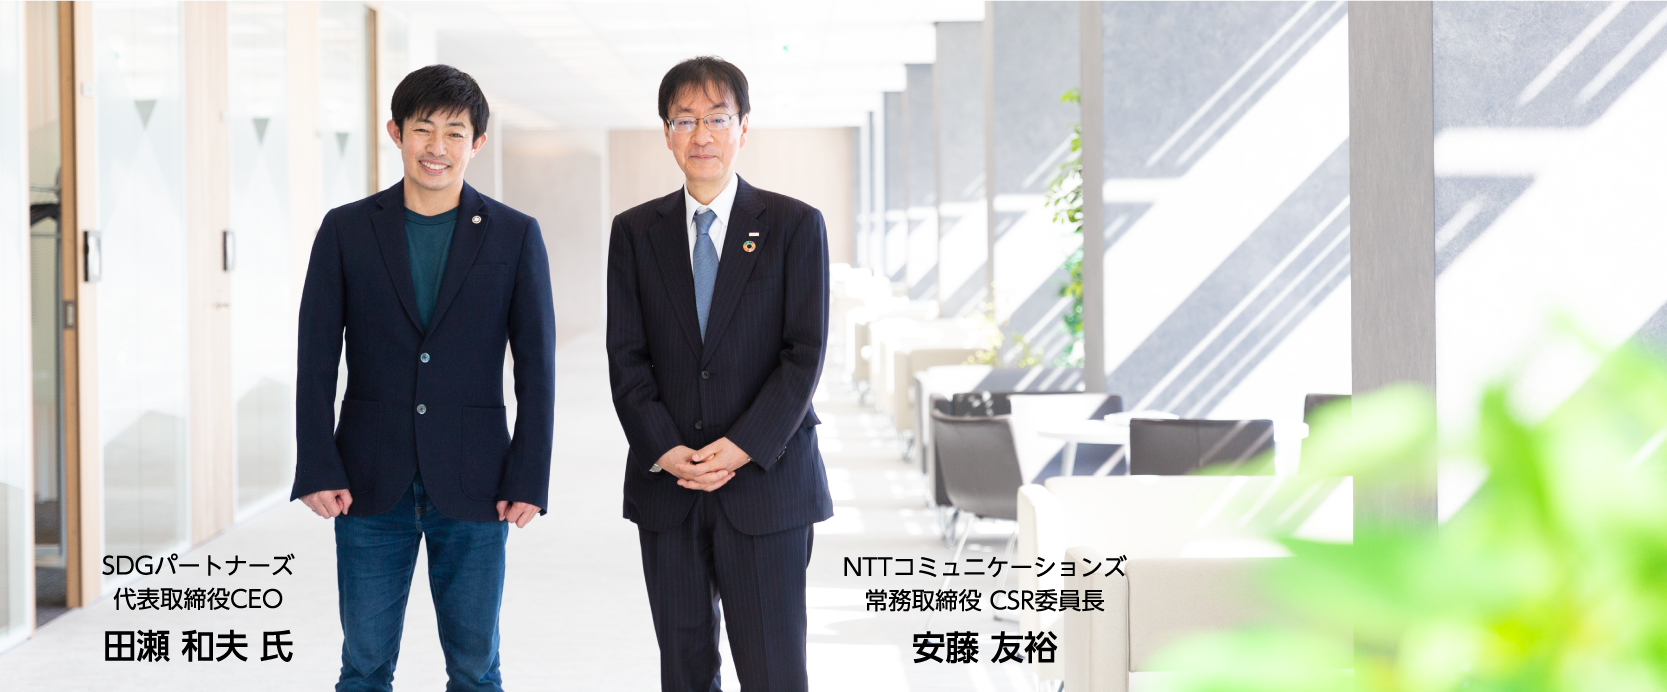 SDGパートナーズ 代表取締役CEO 田瀬 和夫 氏 NTT コミュニケーションズ 常務取締役 CSR 委員長 安藤 友裕